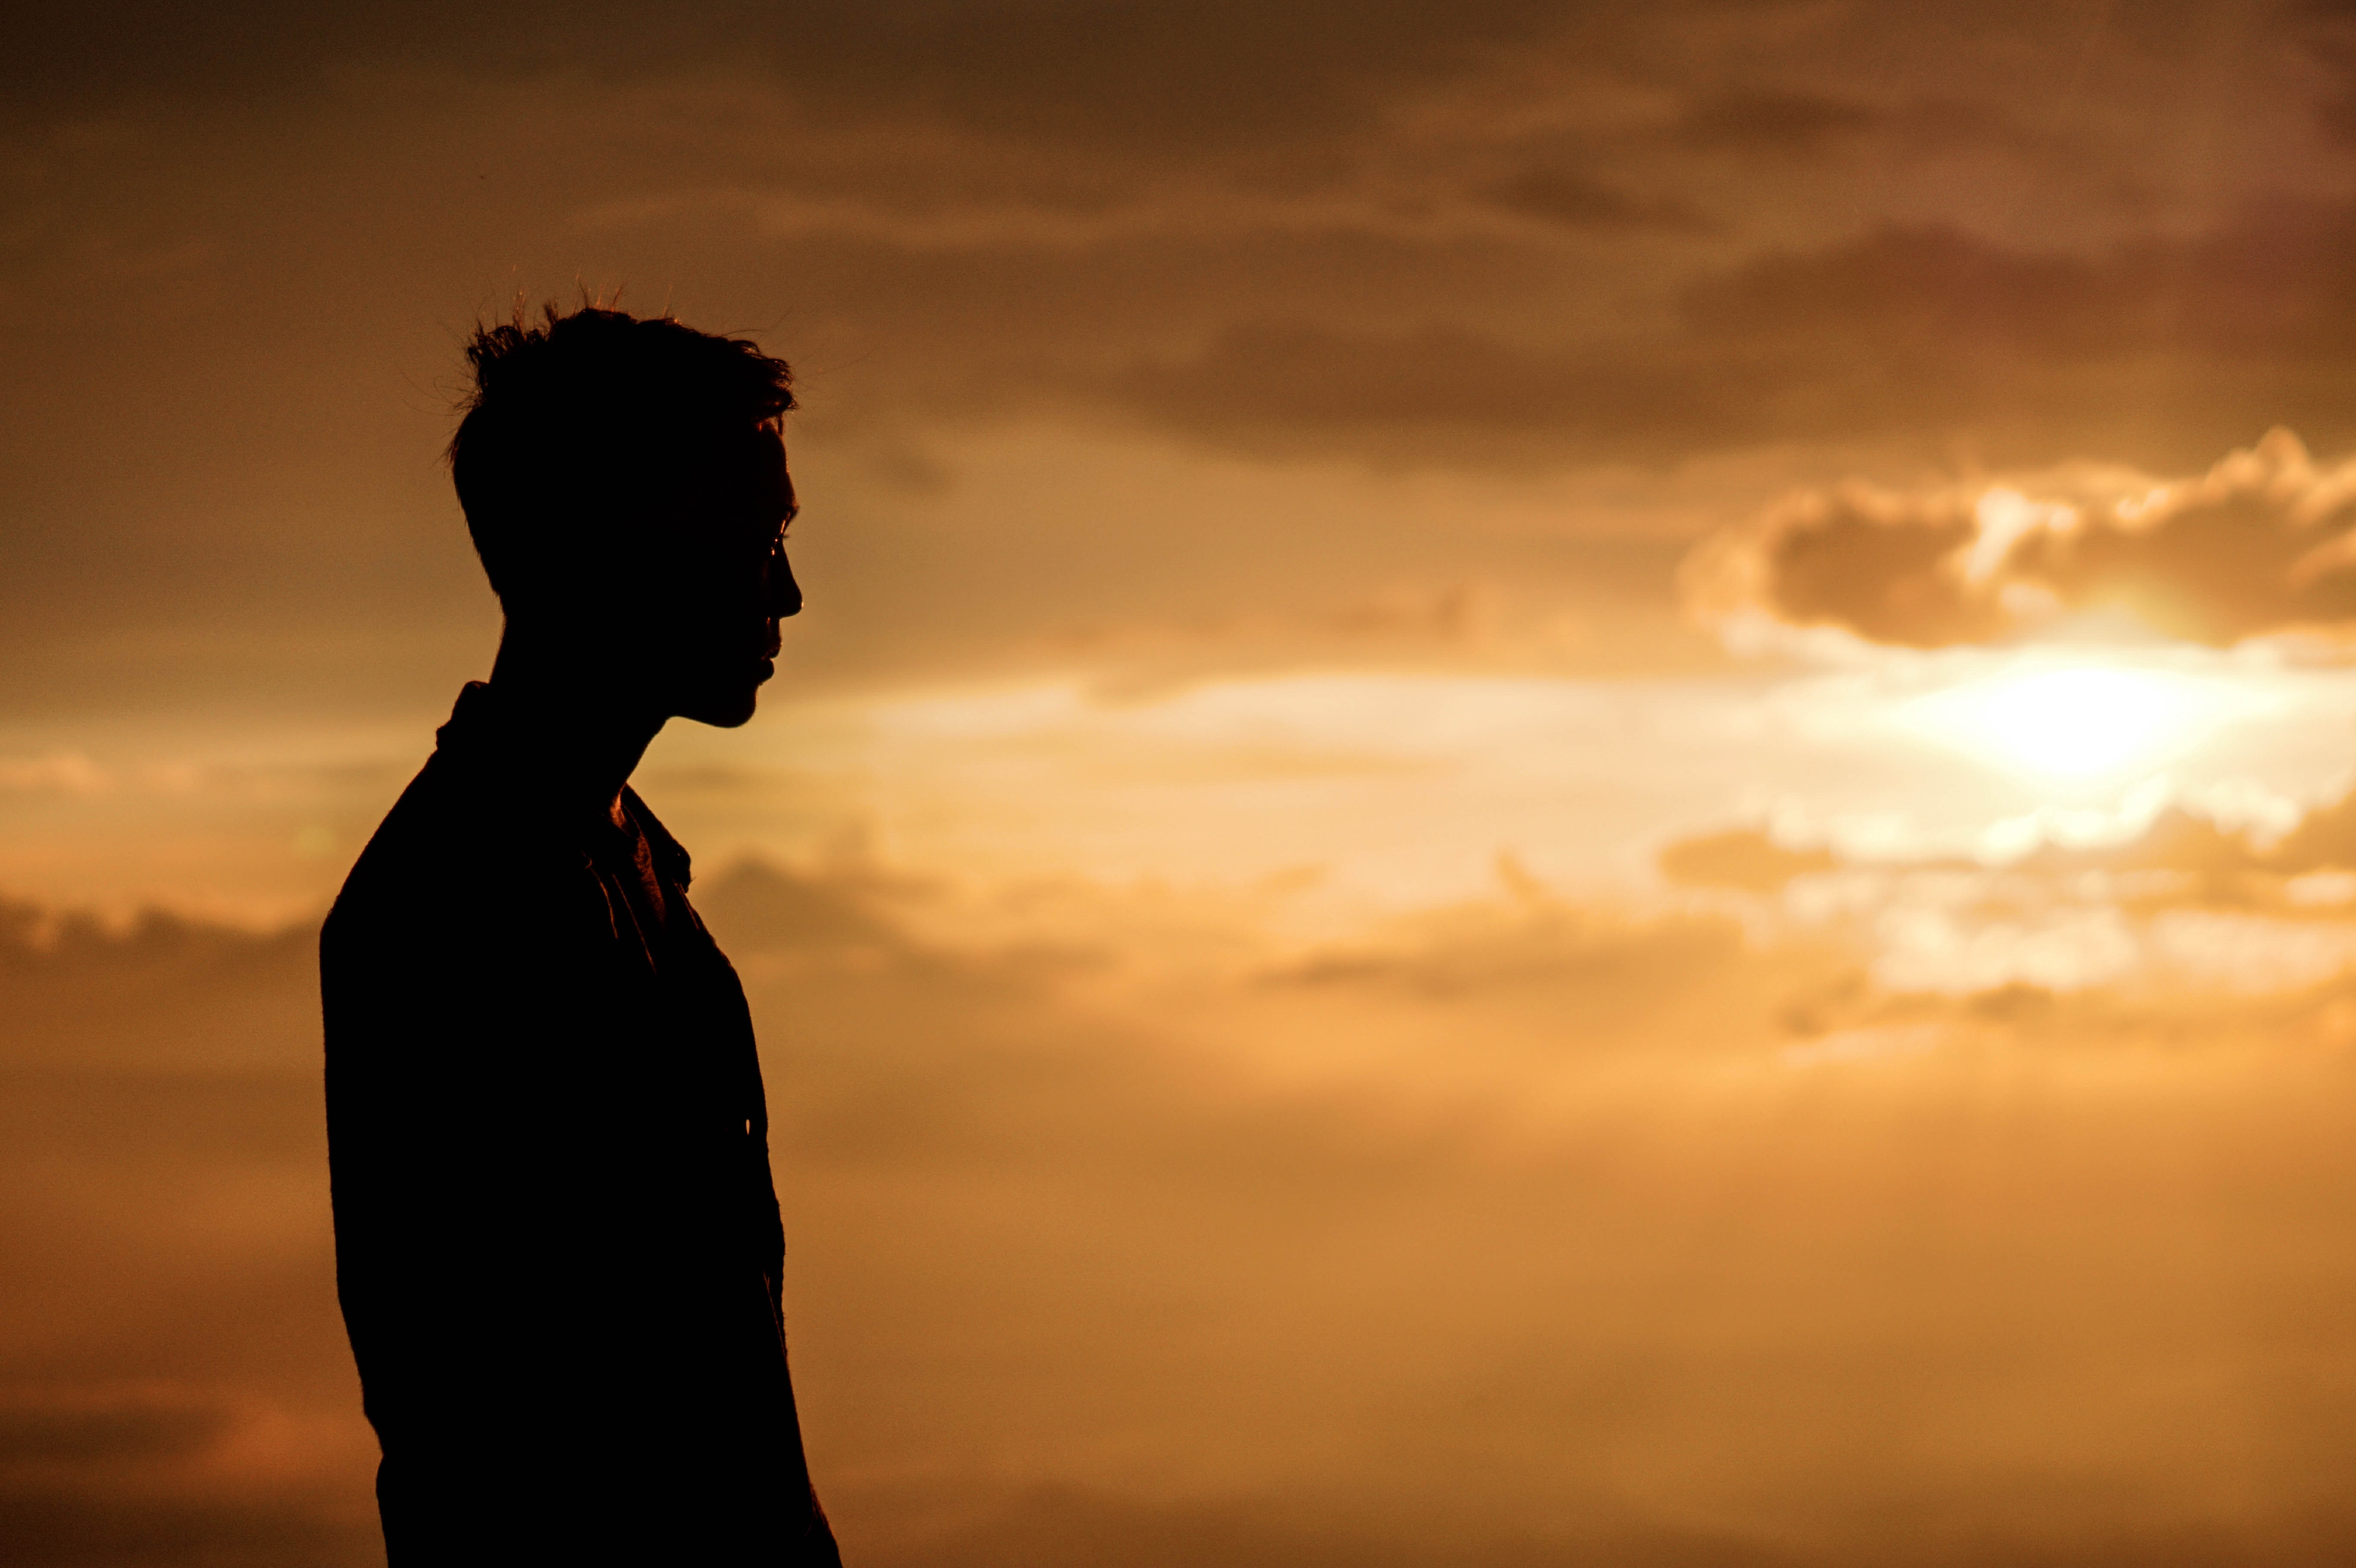 A man contemplates during a sunset.